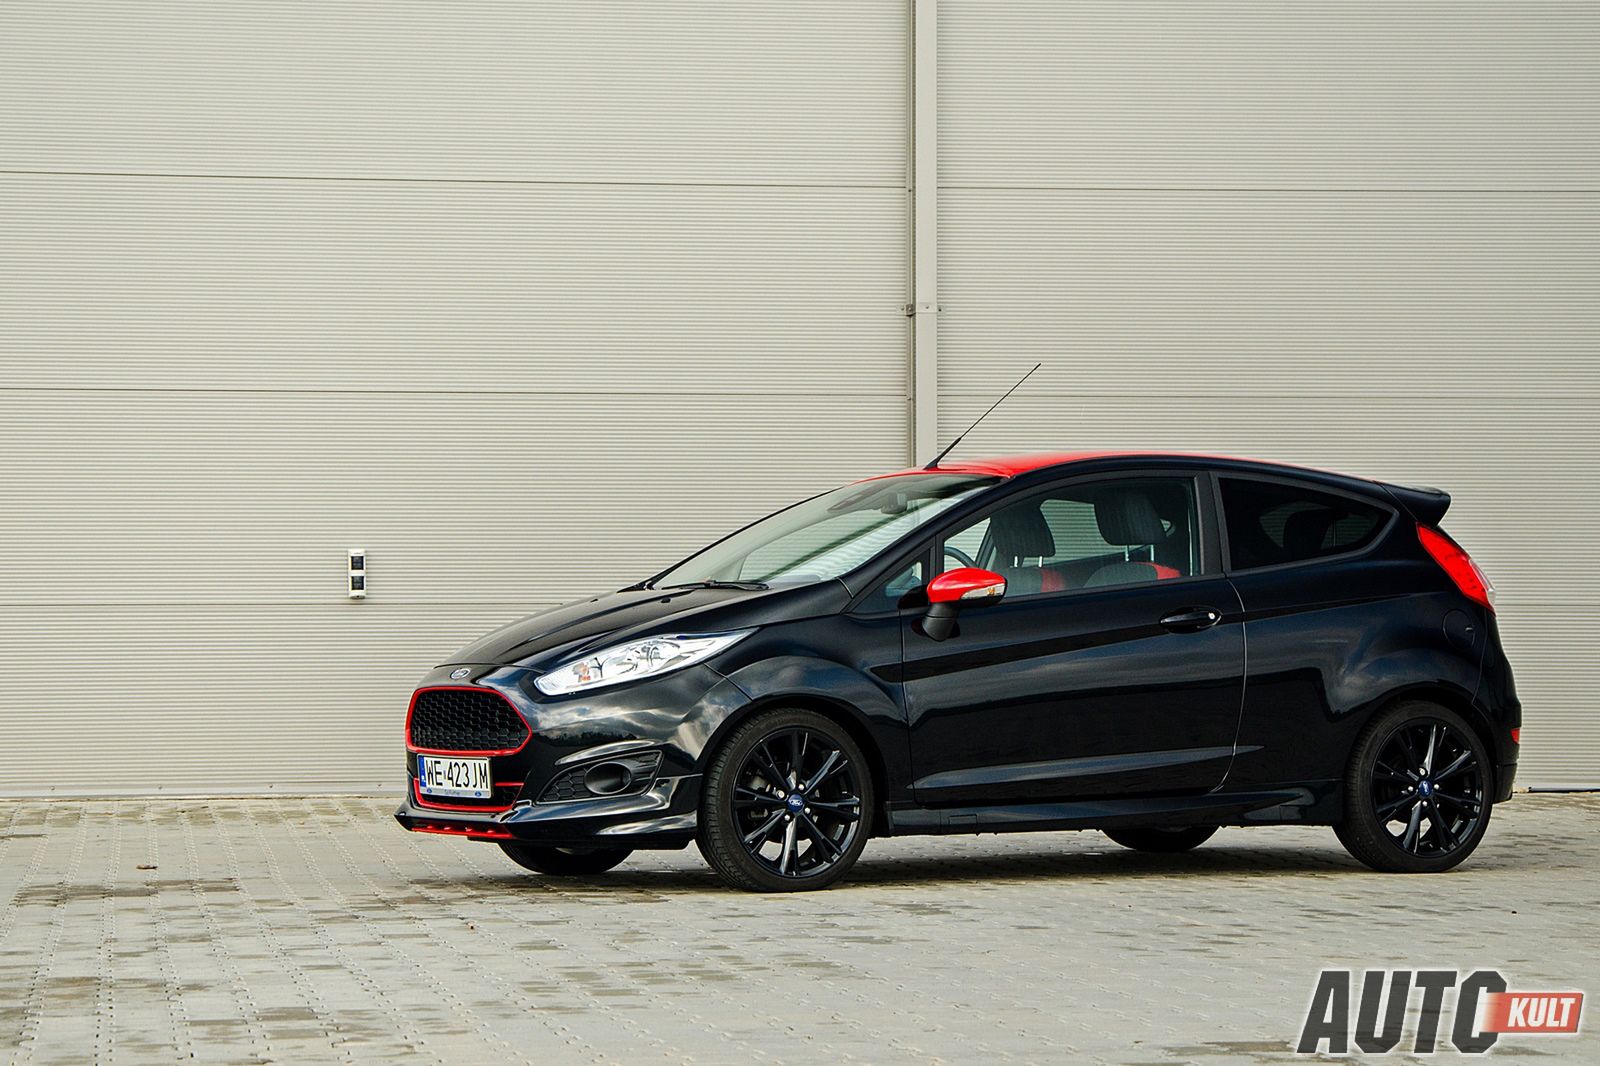 Ford Fiesta 1.0 Ecoboost Black Edition - Test, Opinia, Spalanie, Cena | Autokult.pl